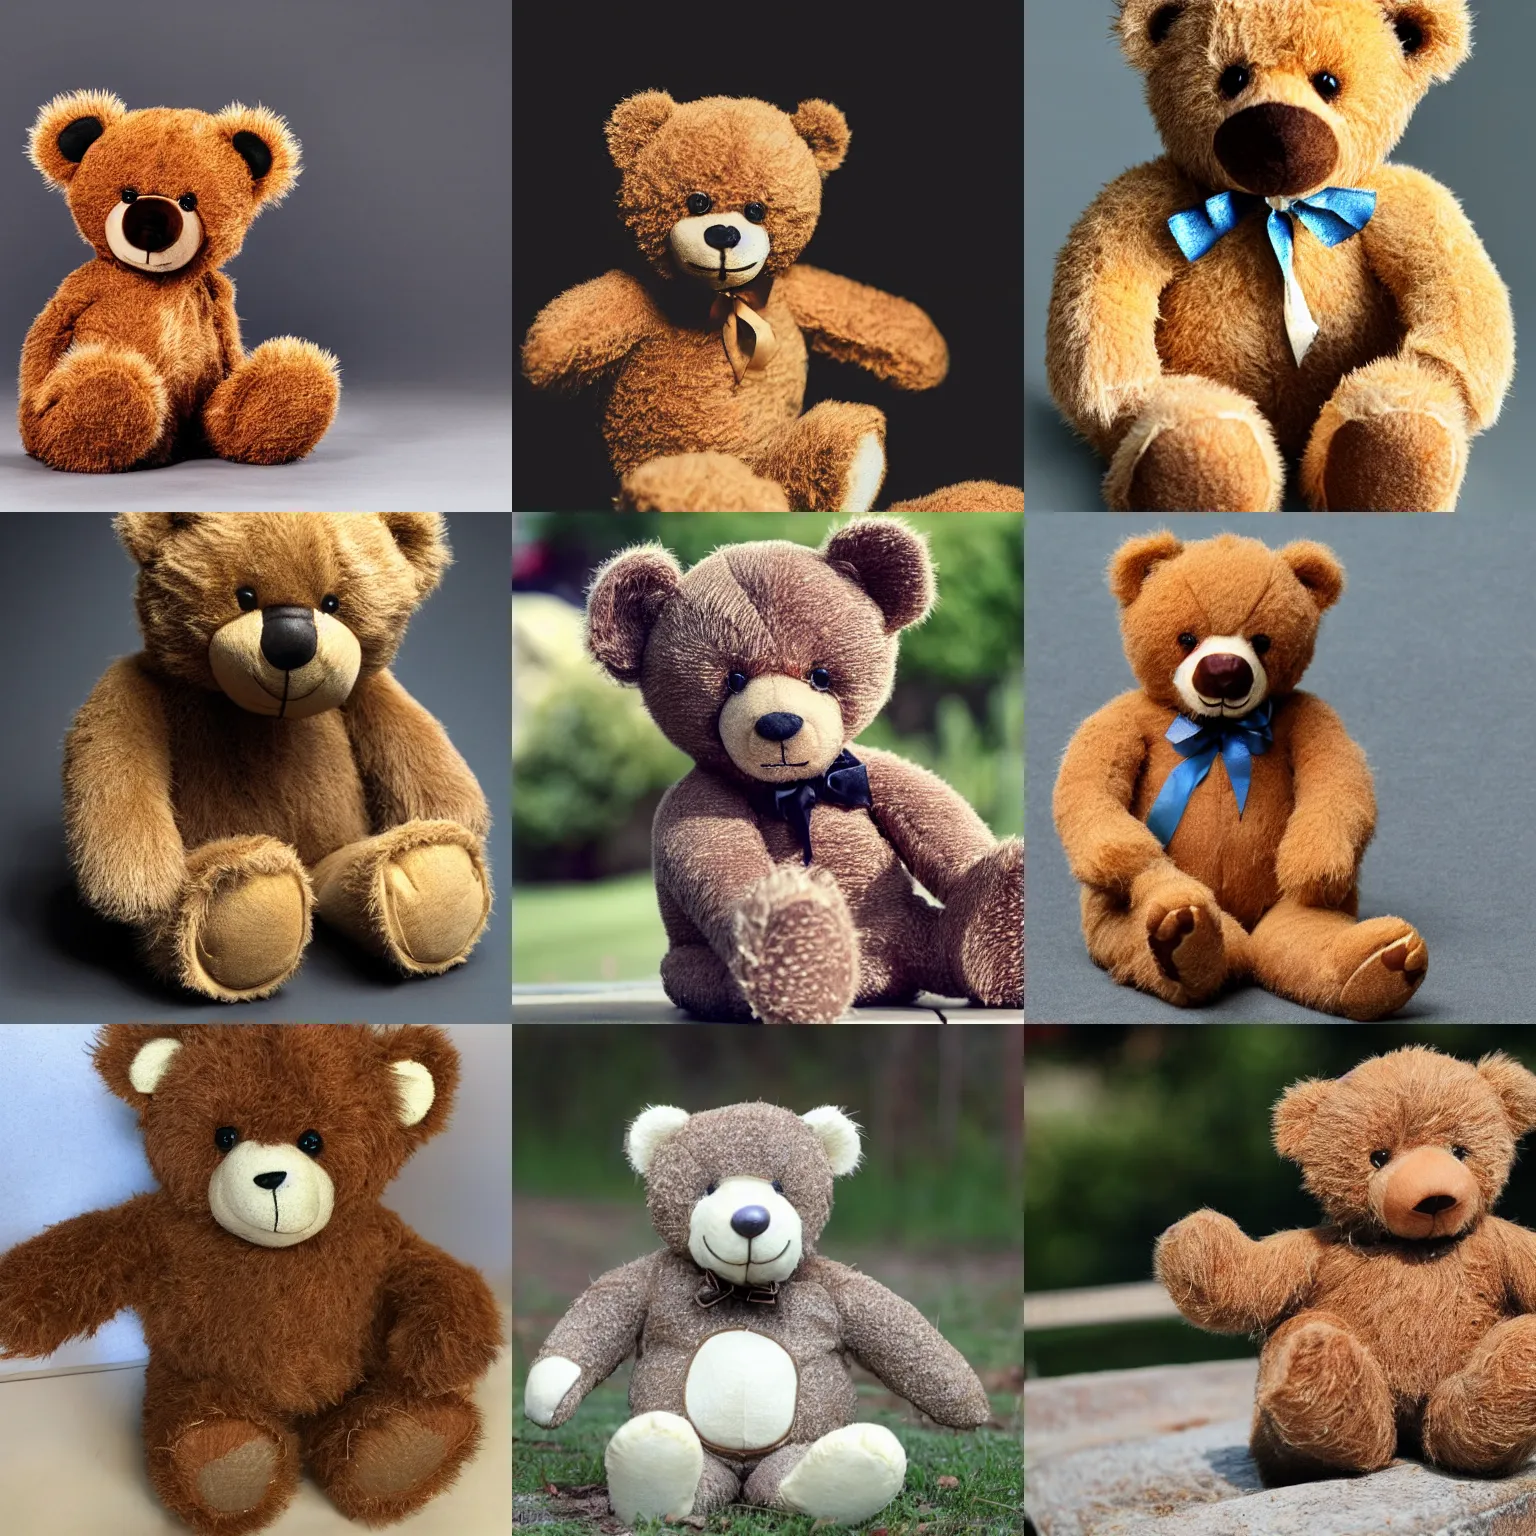 Prompt: A teddy bear